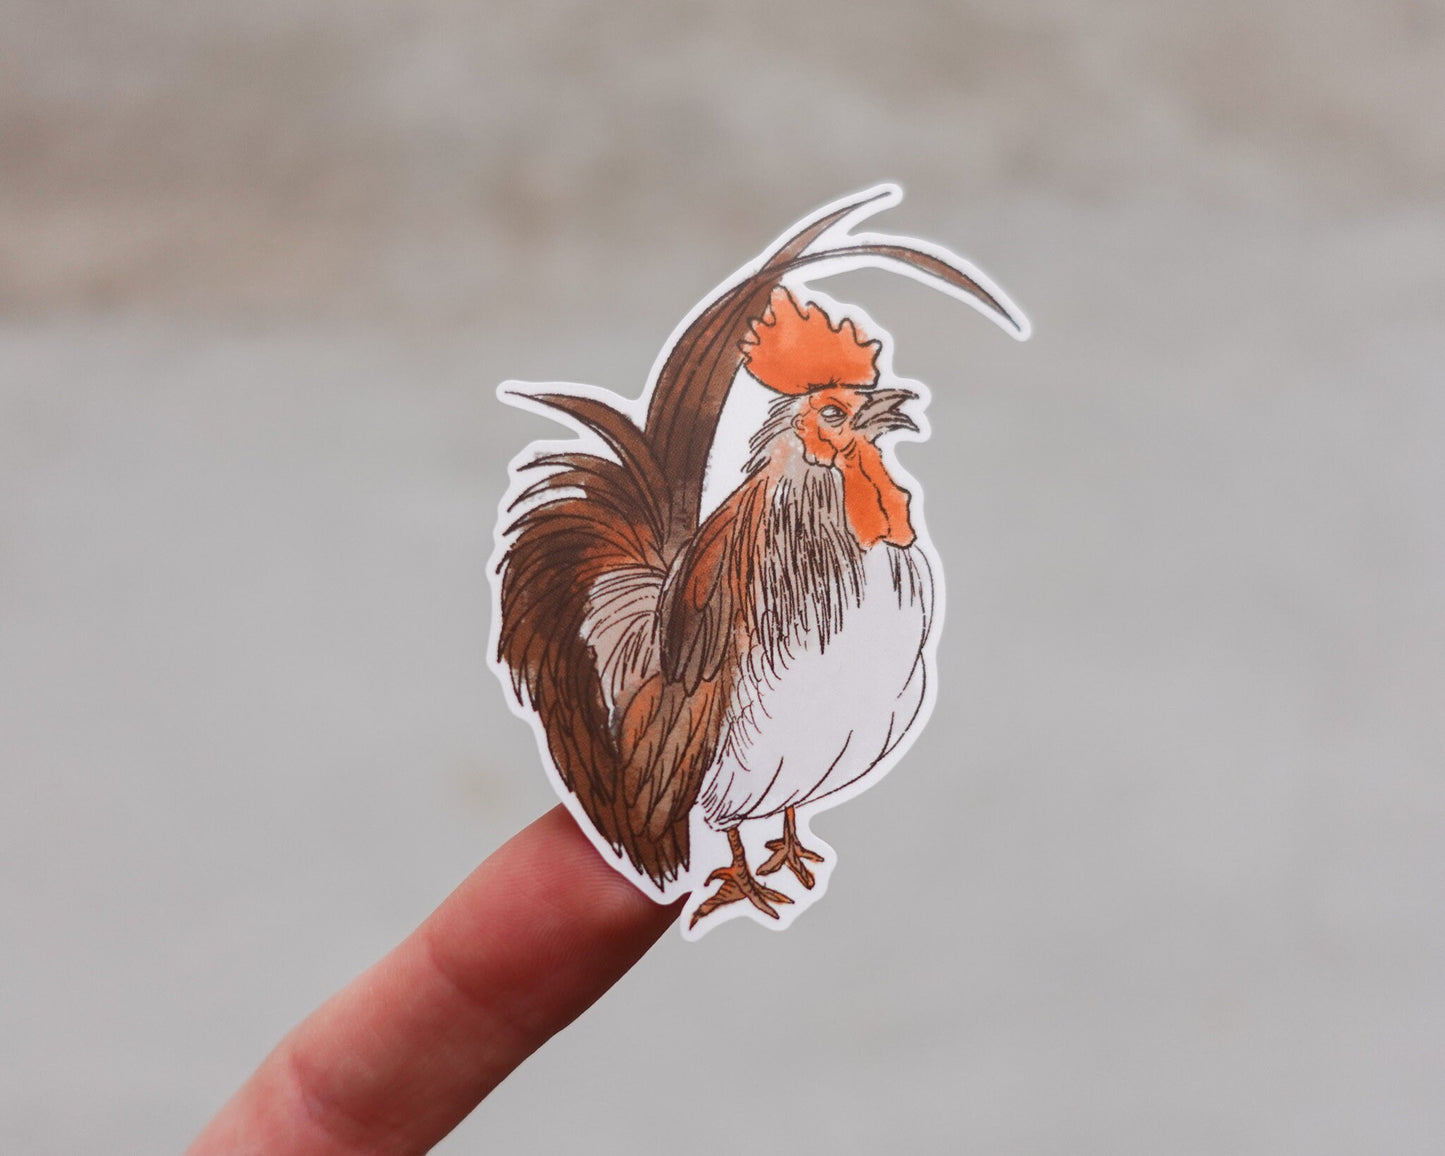 Chicken and Flowers – Stickersheet with 6 Japanese Stickers inspired by Kono Bairei Ukiyo-e